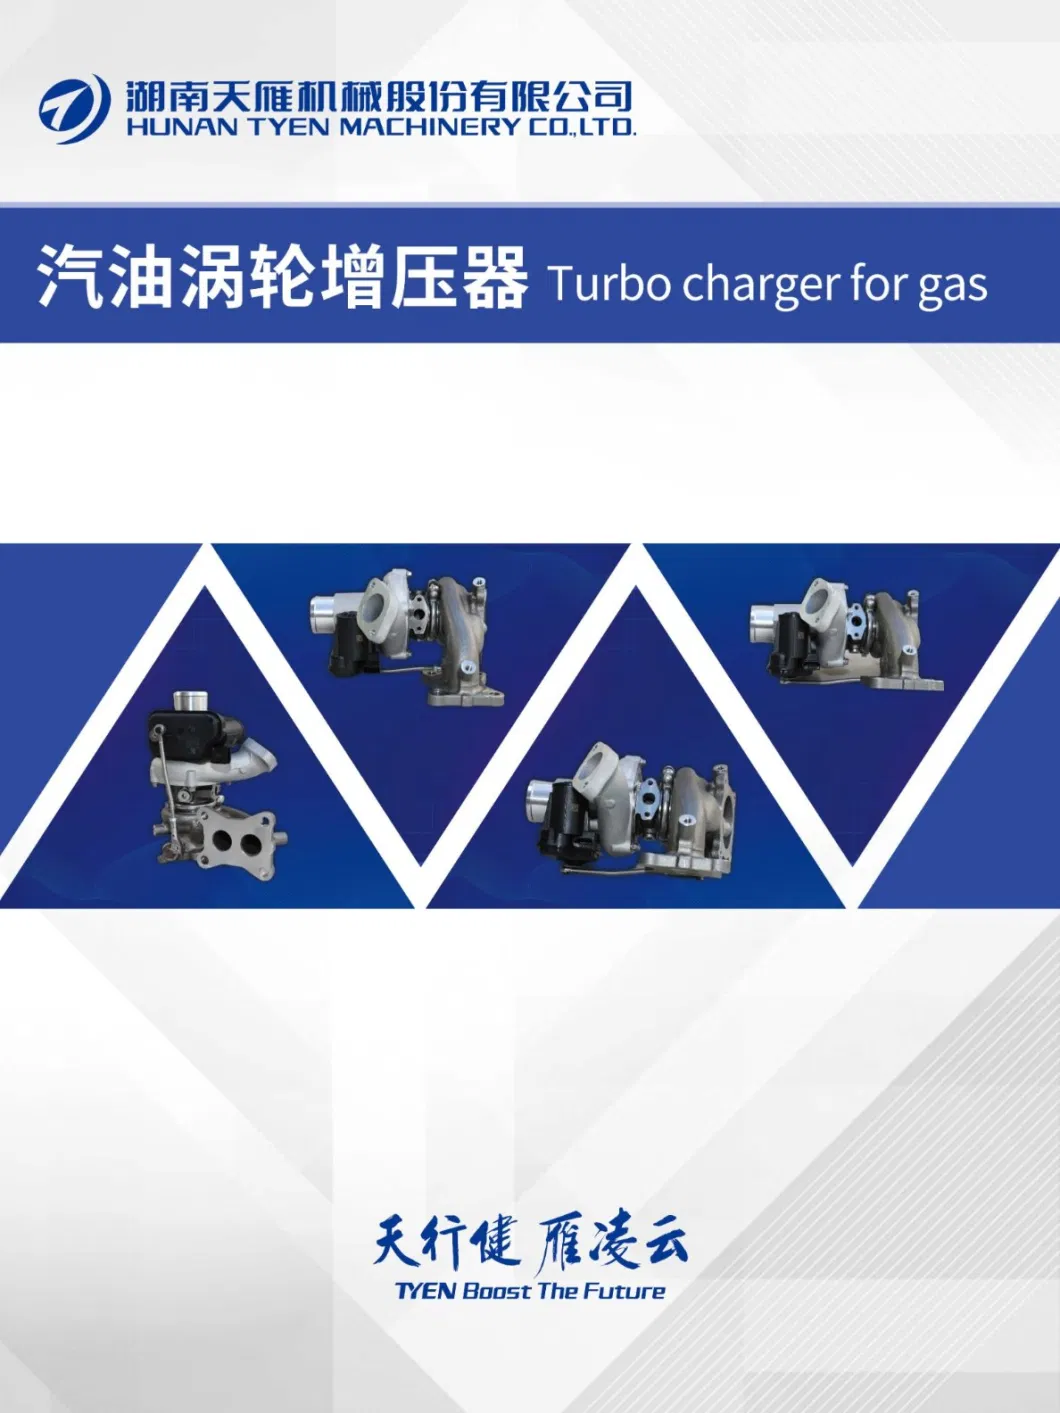 Original Factory Yuchai J4208 Diesel Engine Turbocharger